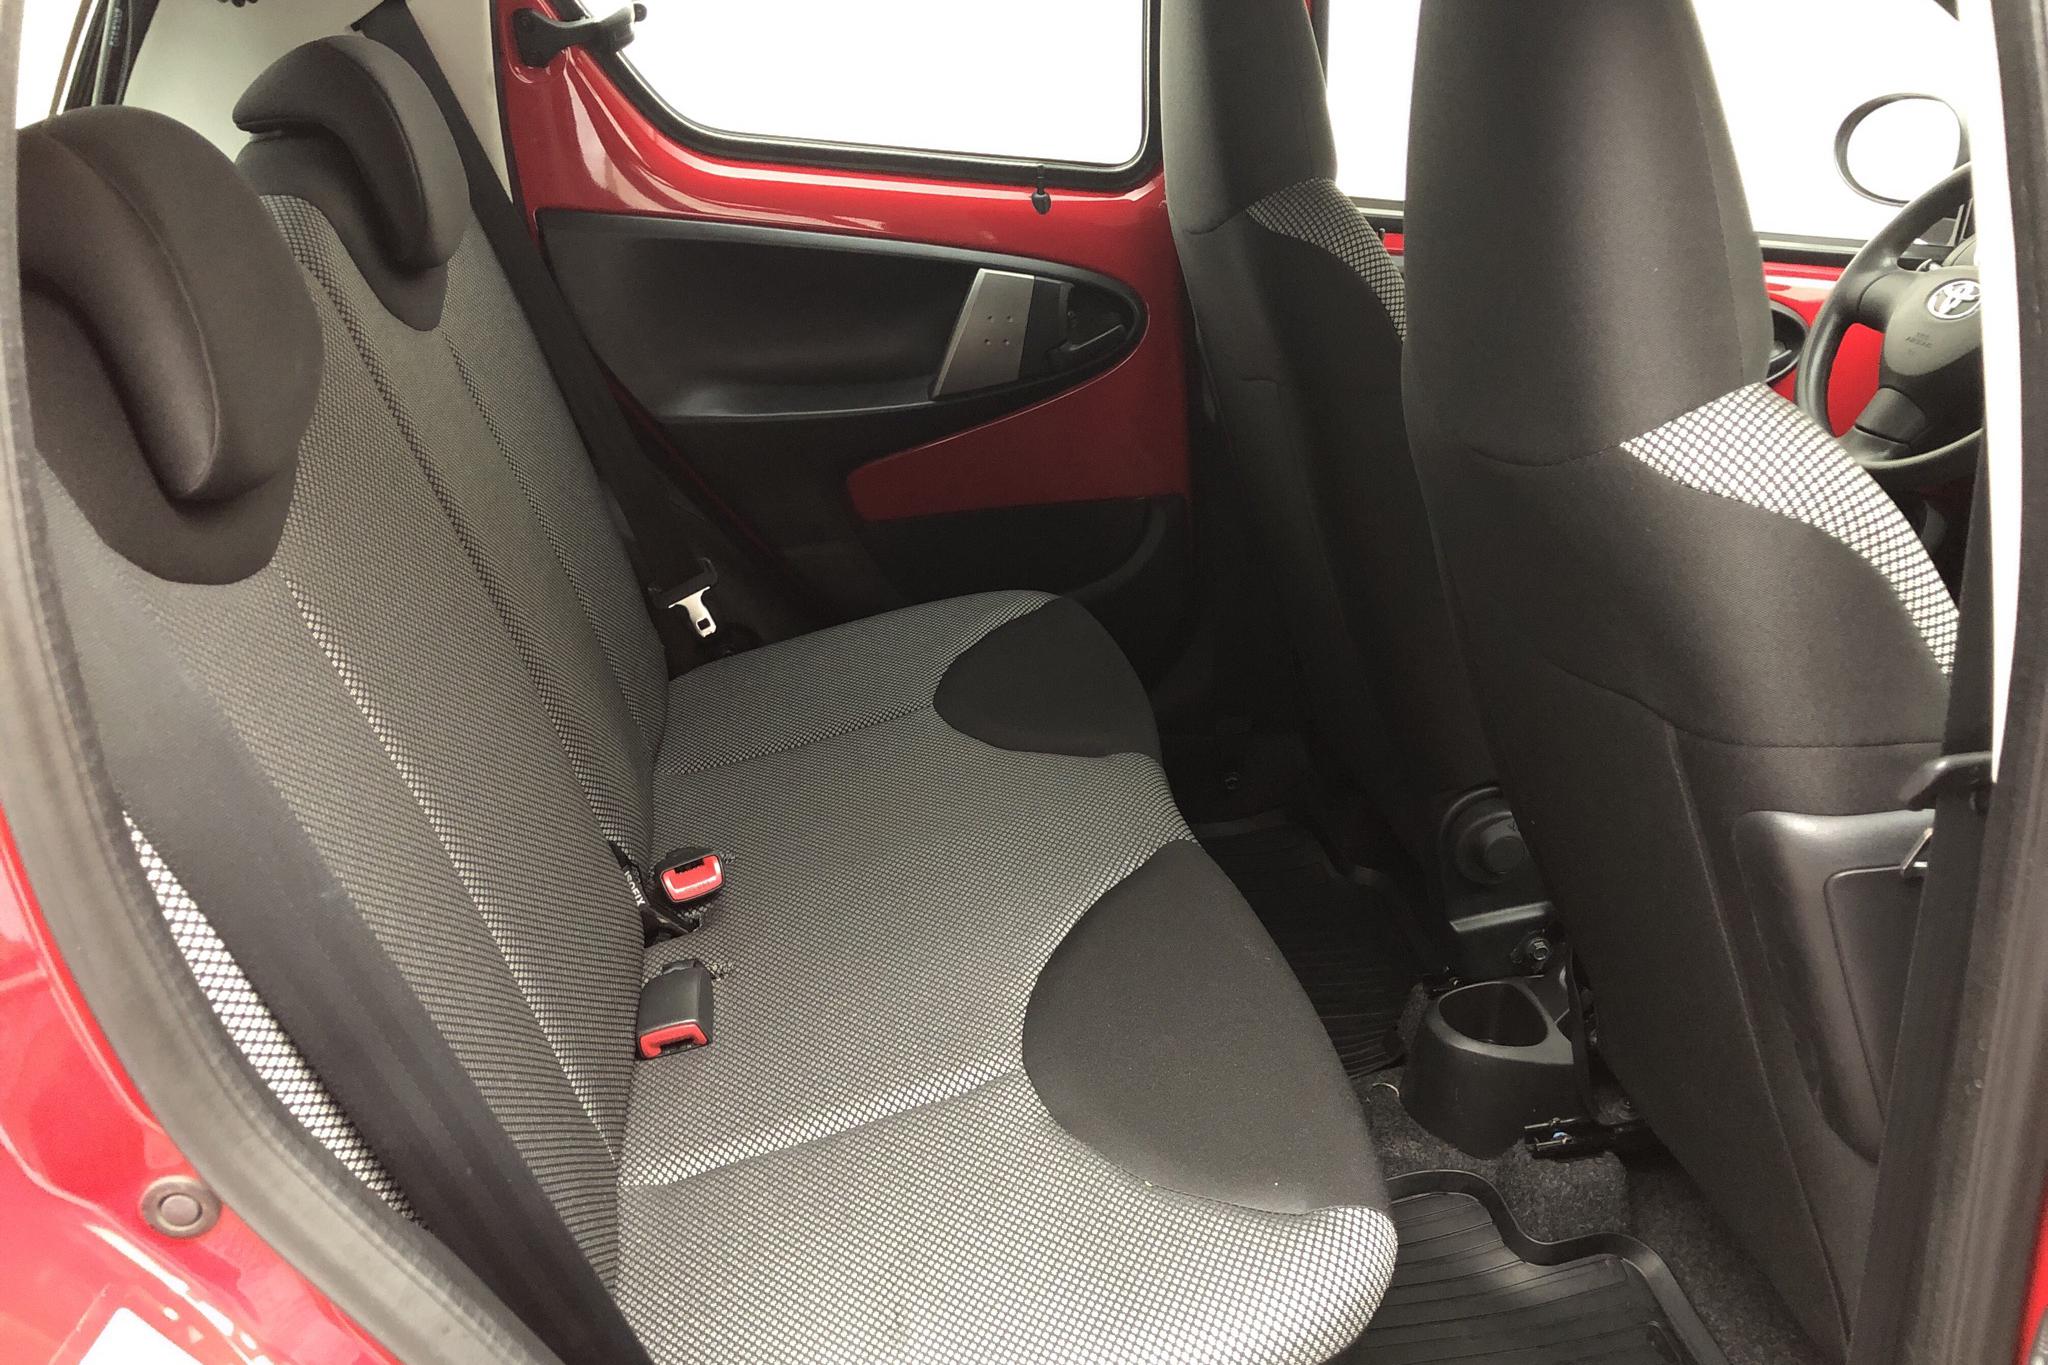 Toyota Aygo 1.0 VVT-i 5dr (68hk) - 69 520 km - Manual - red - 2014